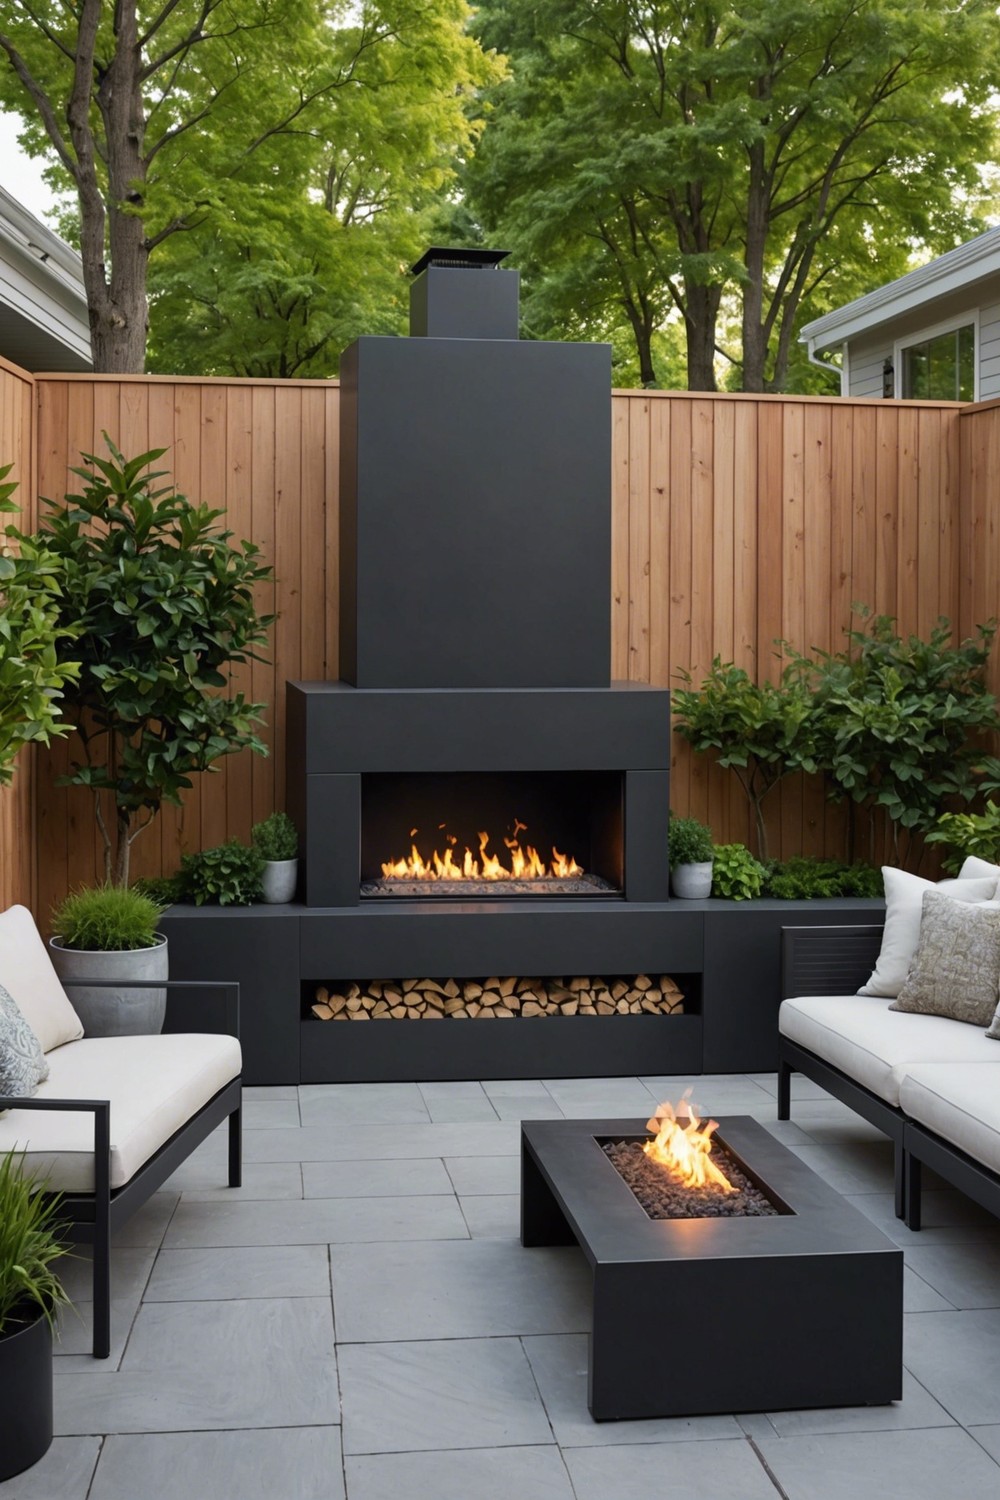 Linear Patio Fireplace: